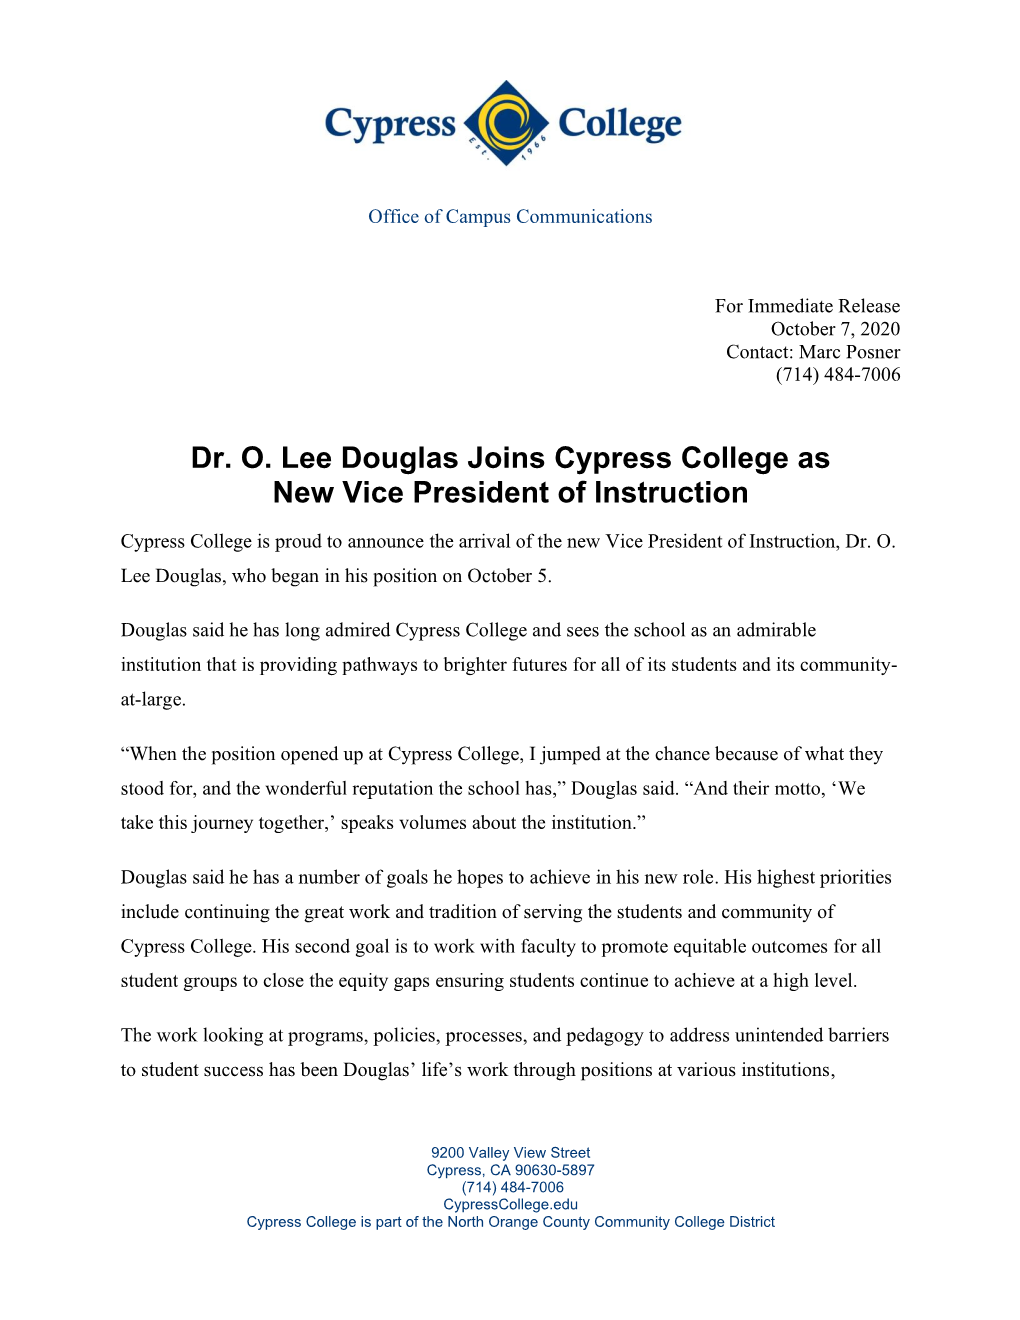 Dr Lee Douglas Joins Cypress College